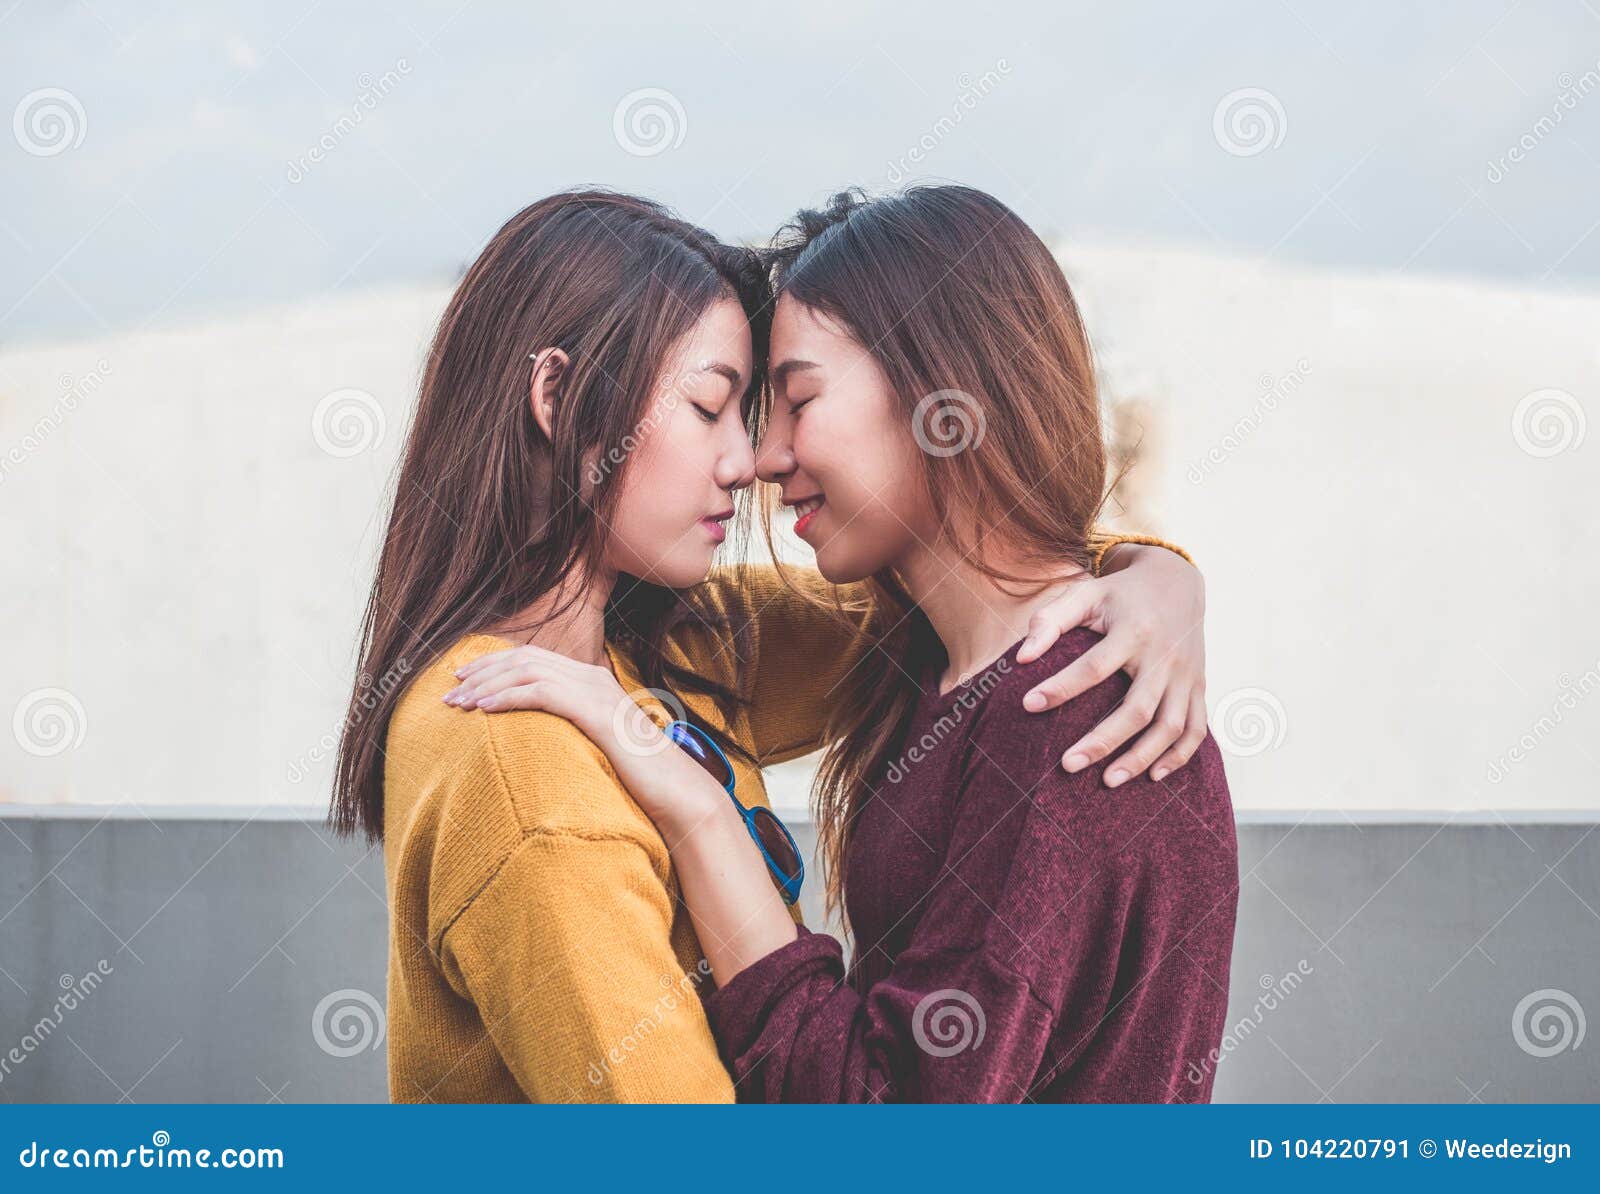 Hot Blonde Lesbian Kissing